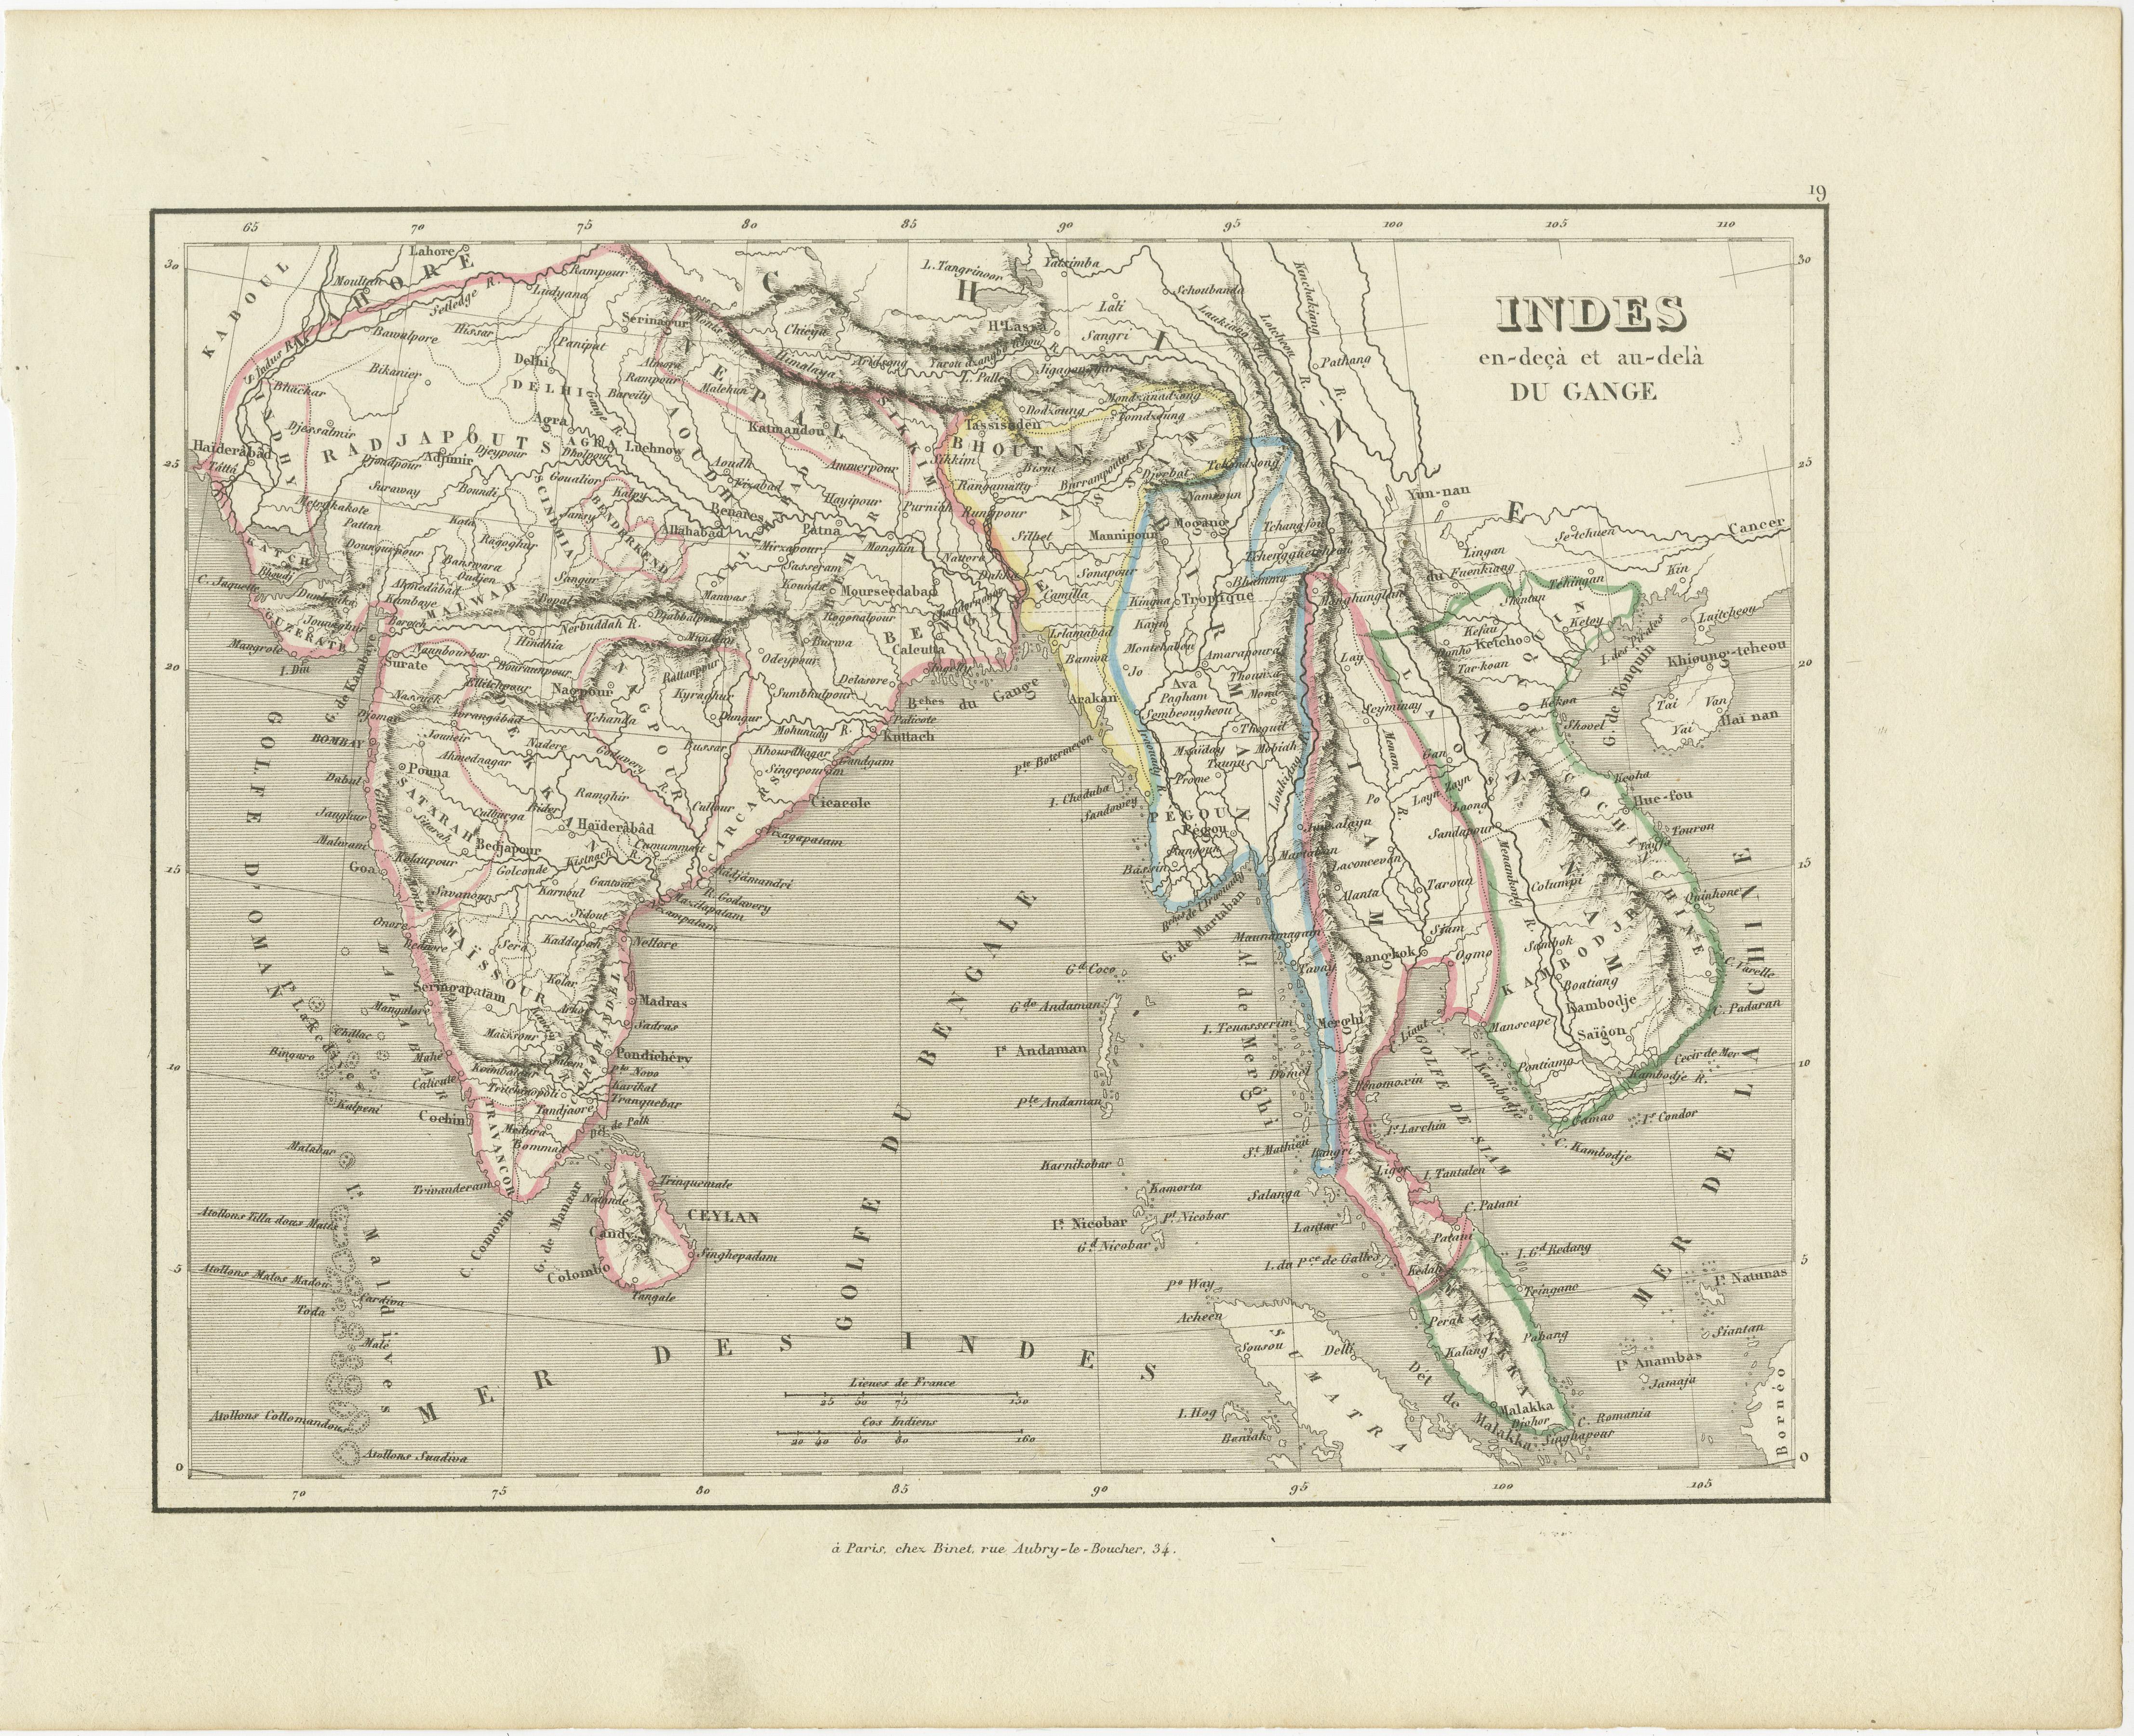 Antique map titled 'Indes en-decà et au-delà du Gange'. Original old map of India to Southeast Asia, showing India, Nepal, Bhutan, Sri Lanka (Ceylon), Myanmar (Birma), part of Indonesia and surroundings. Originates from 'Dictionnaire Universel de